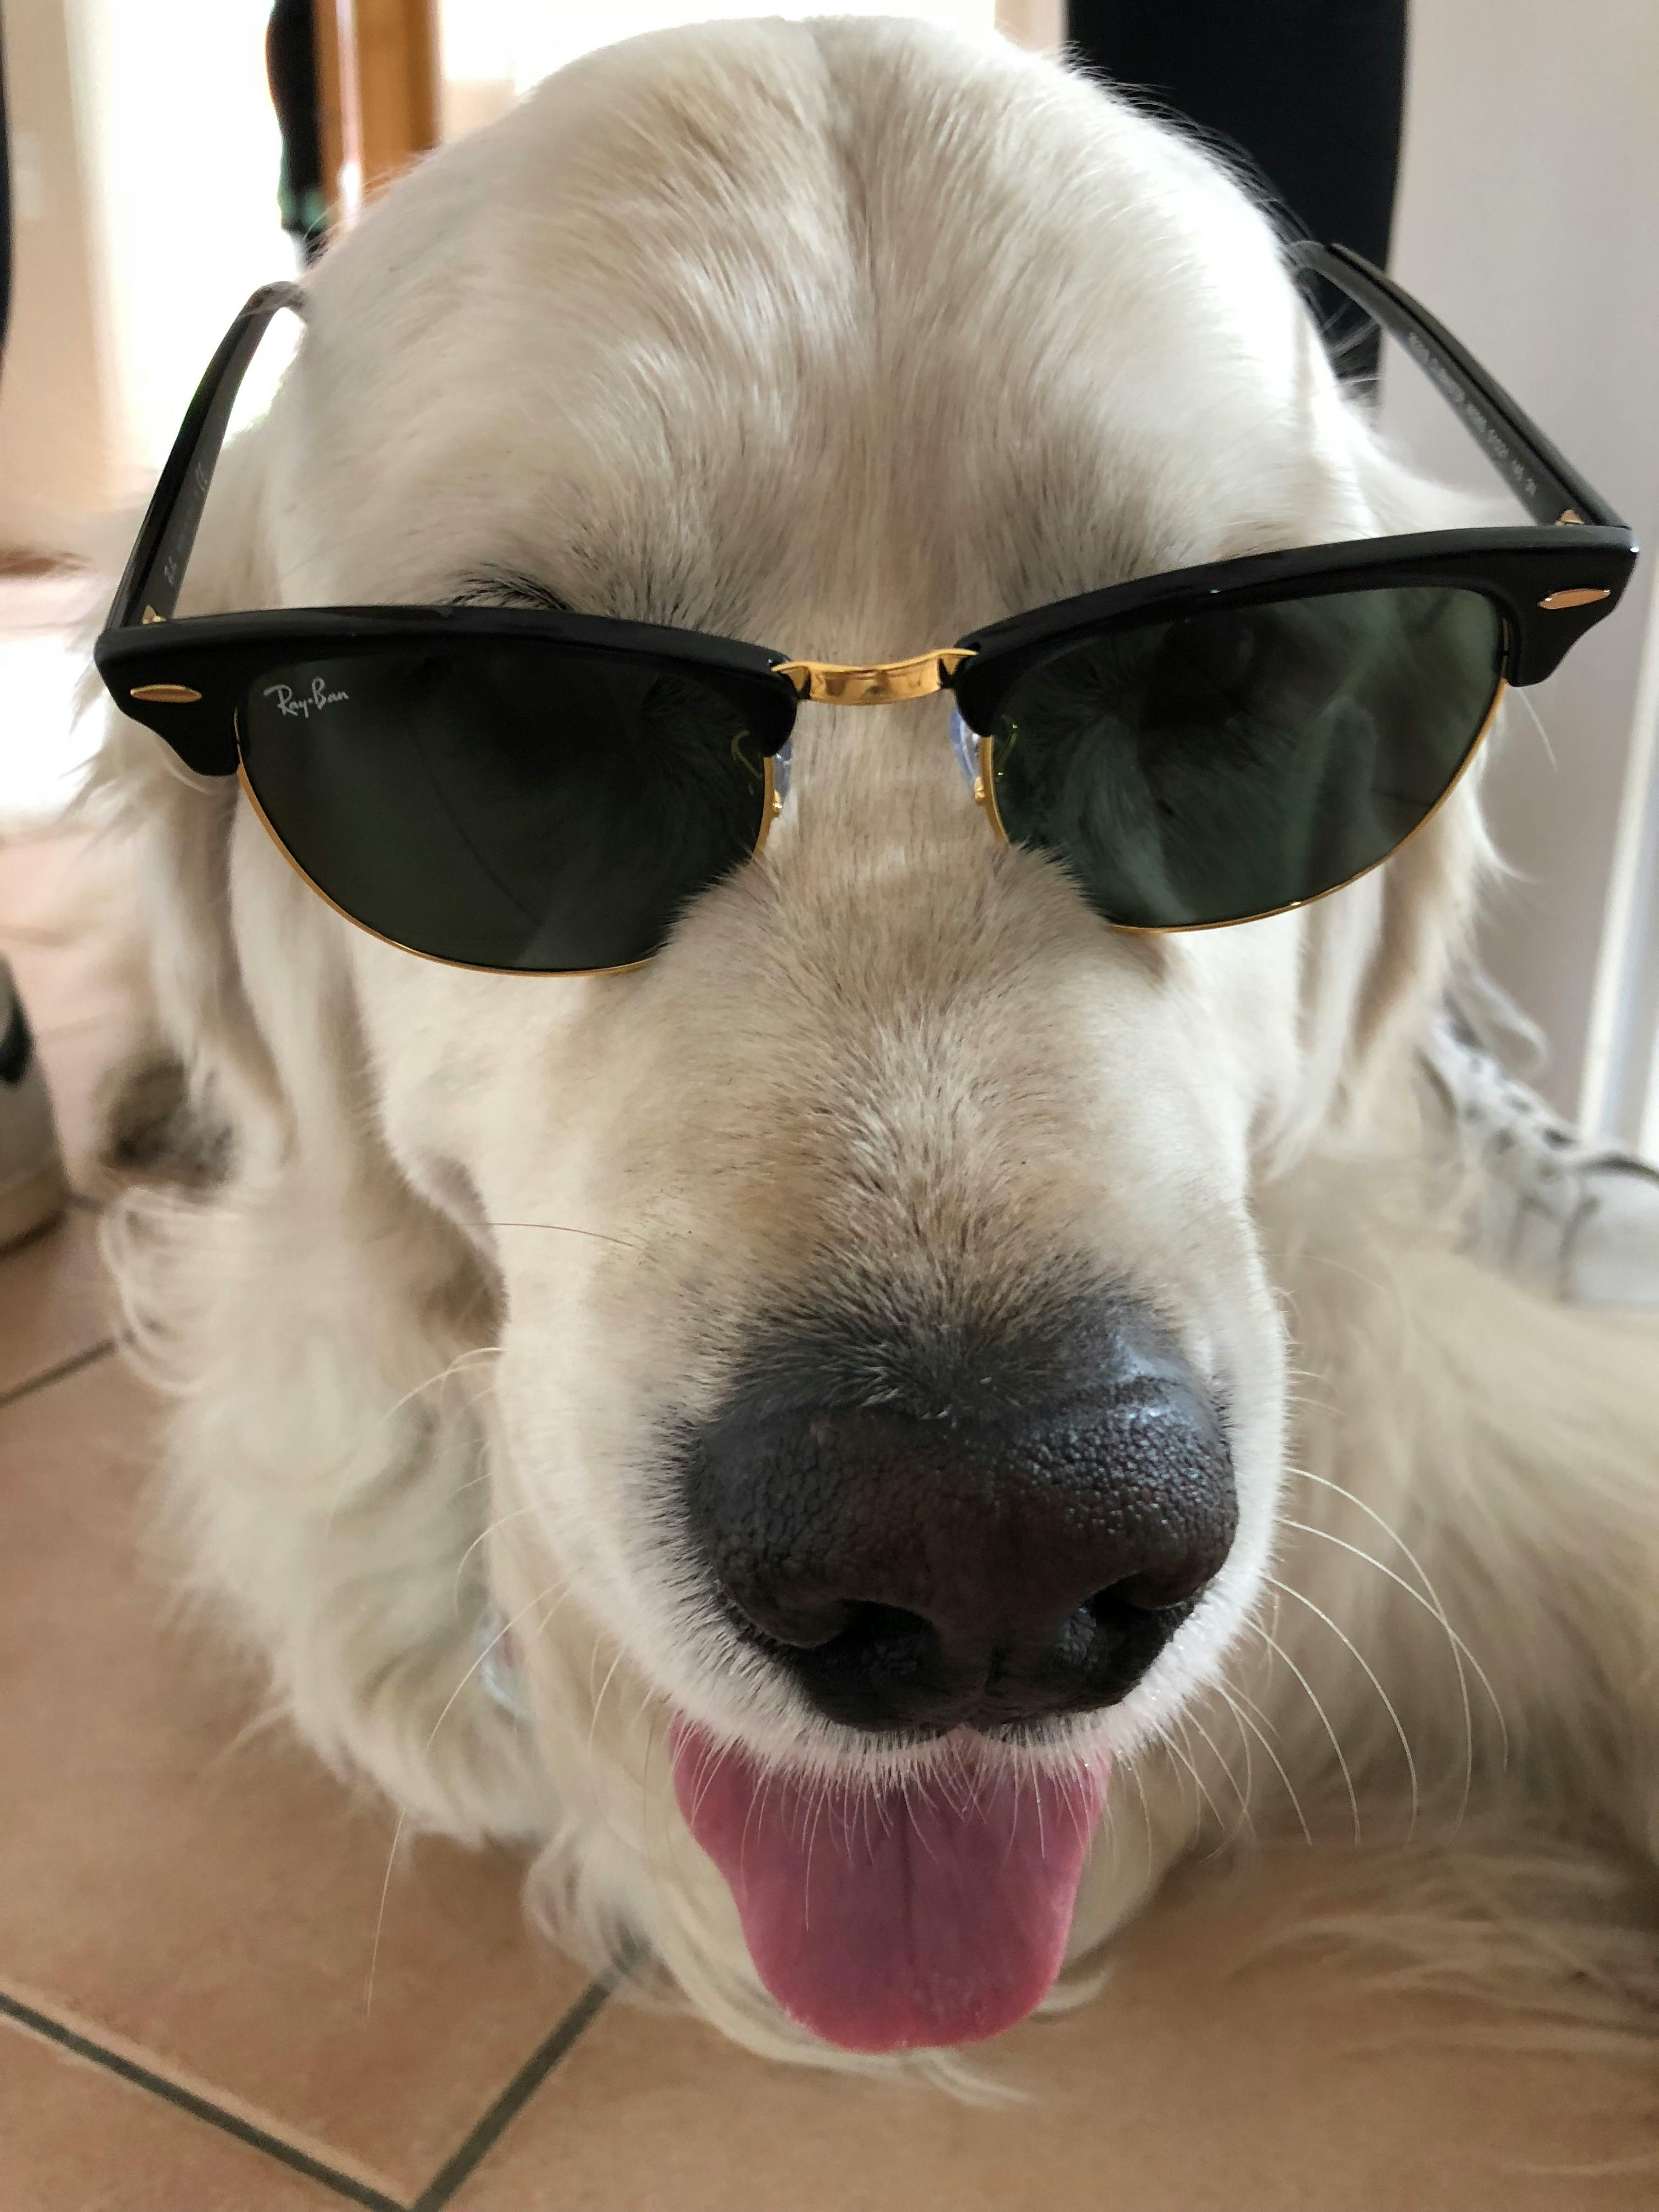 Free stock photo of dog sunglasses